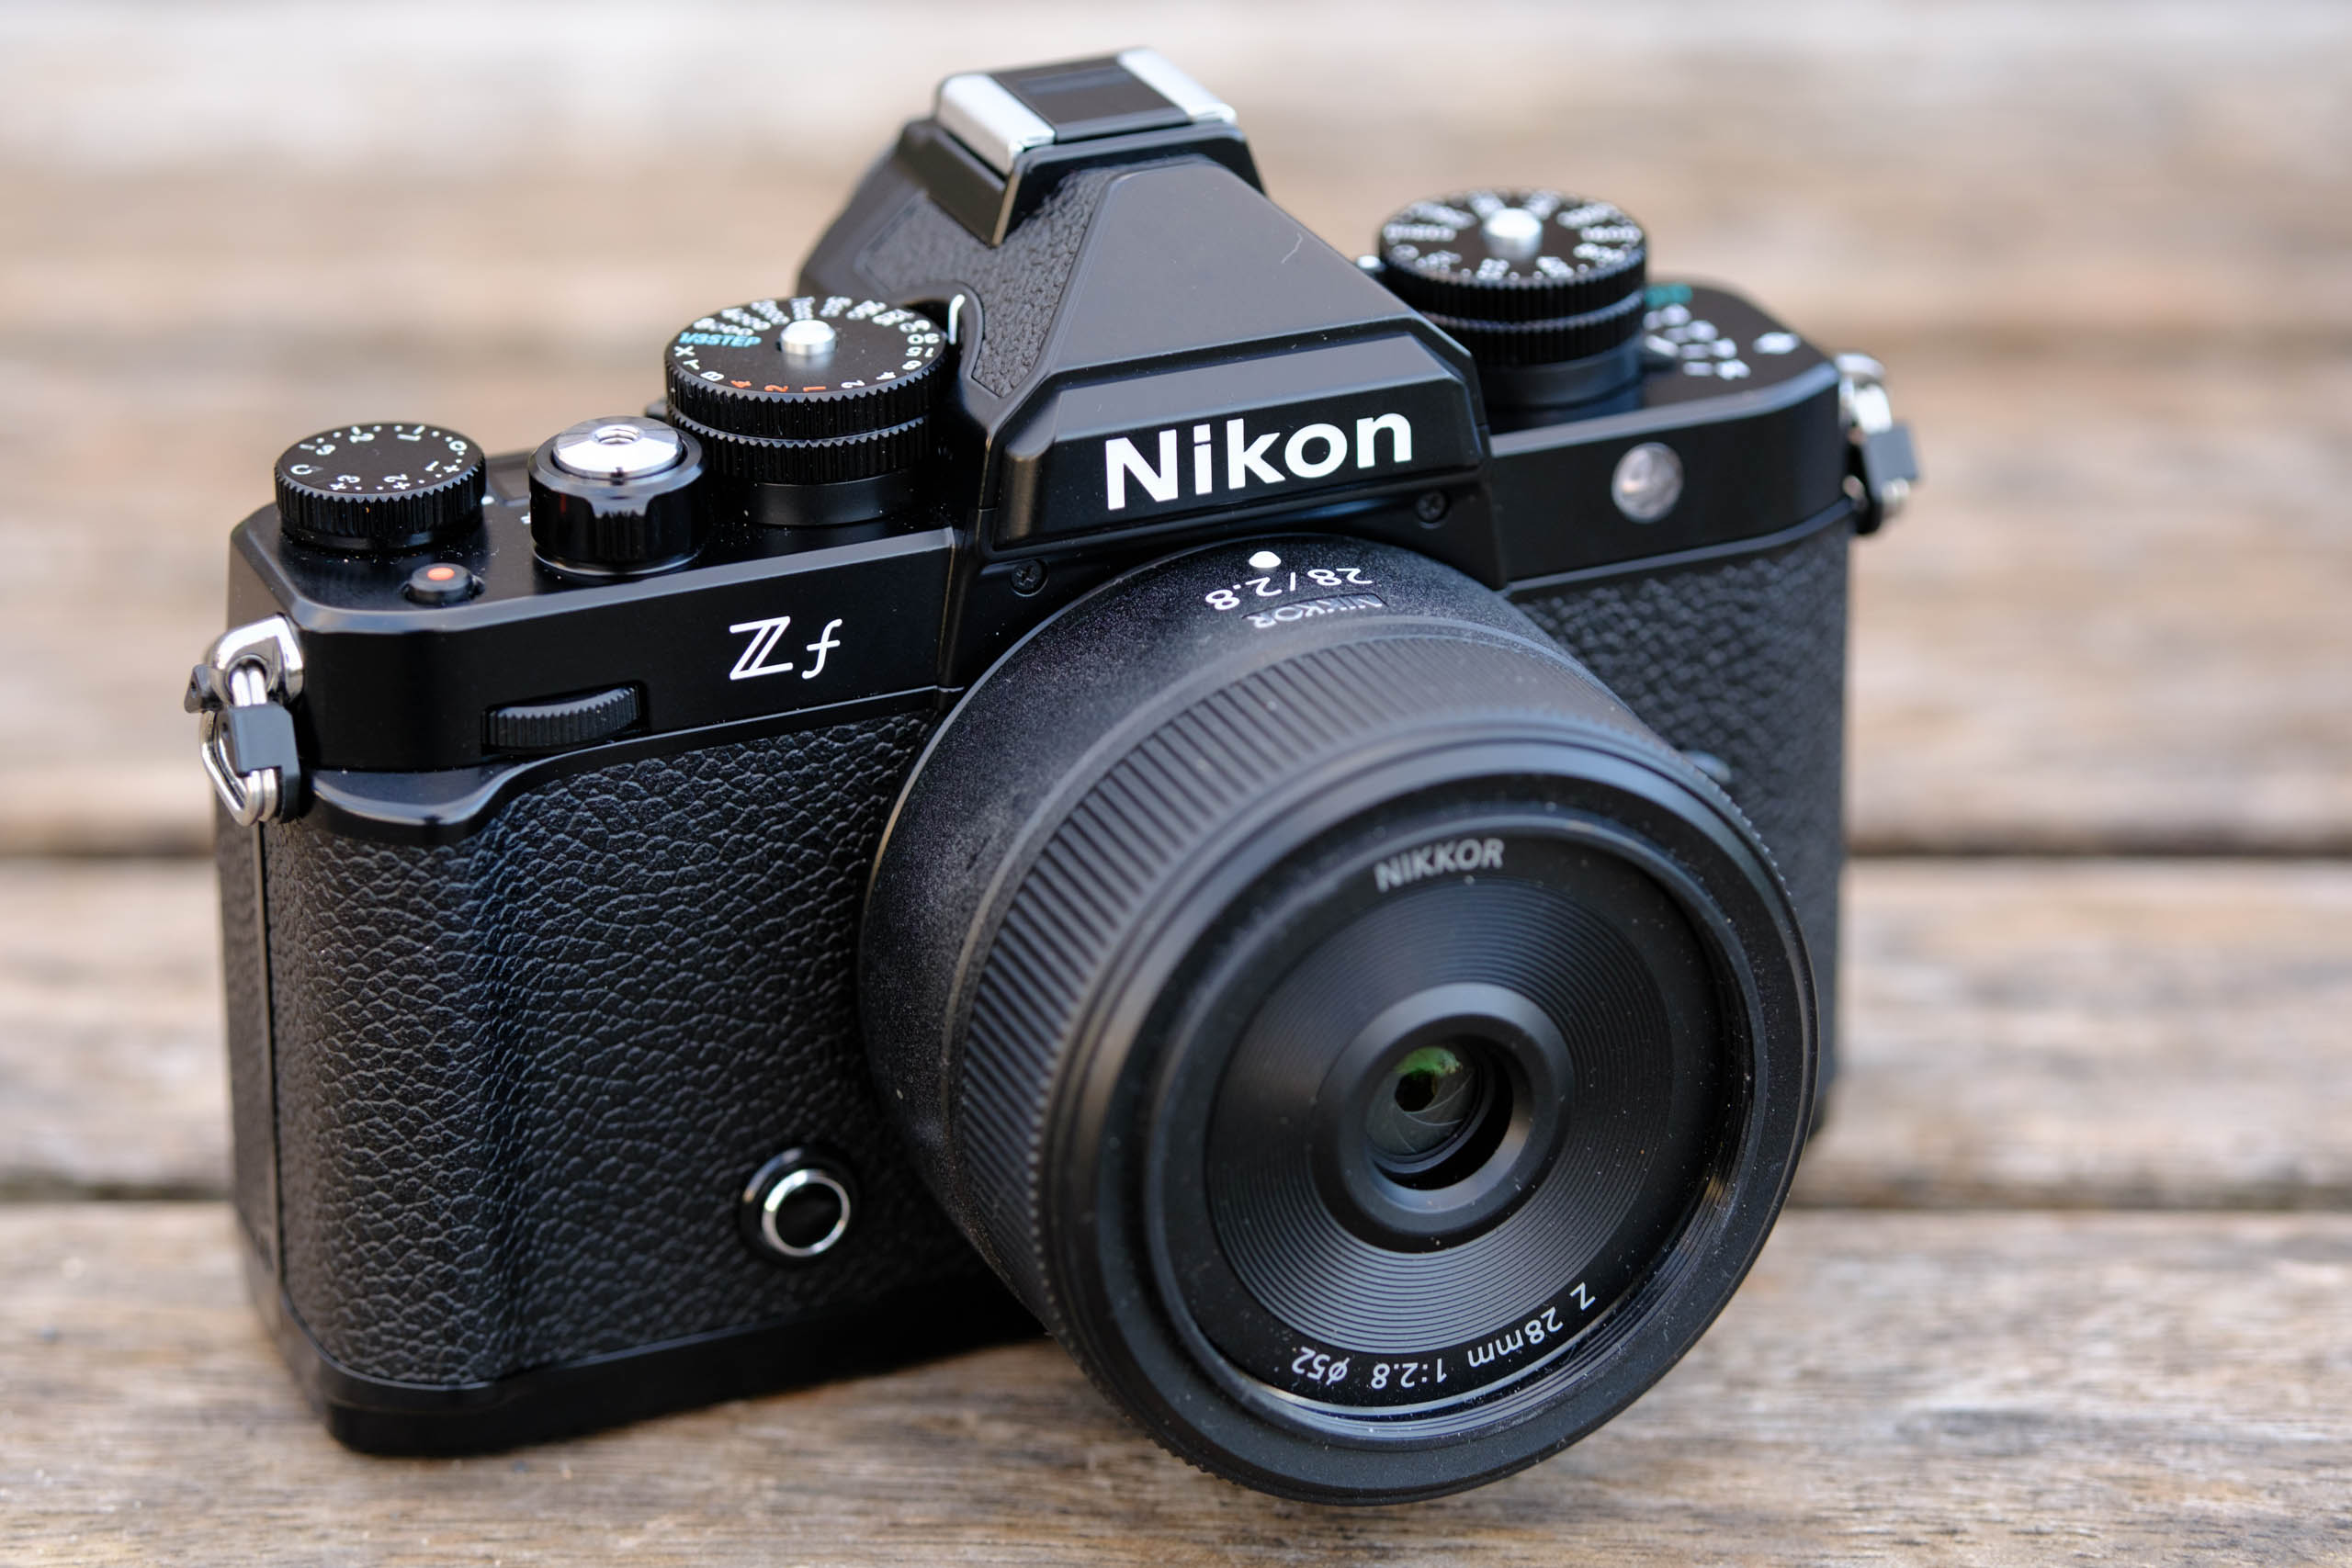 Nikon Z f with 24.5MP Sensor and 4K Video Recording